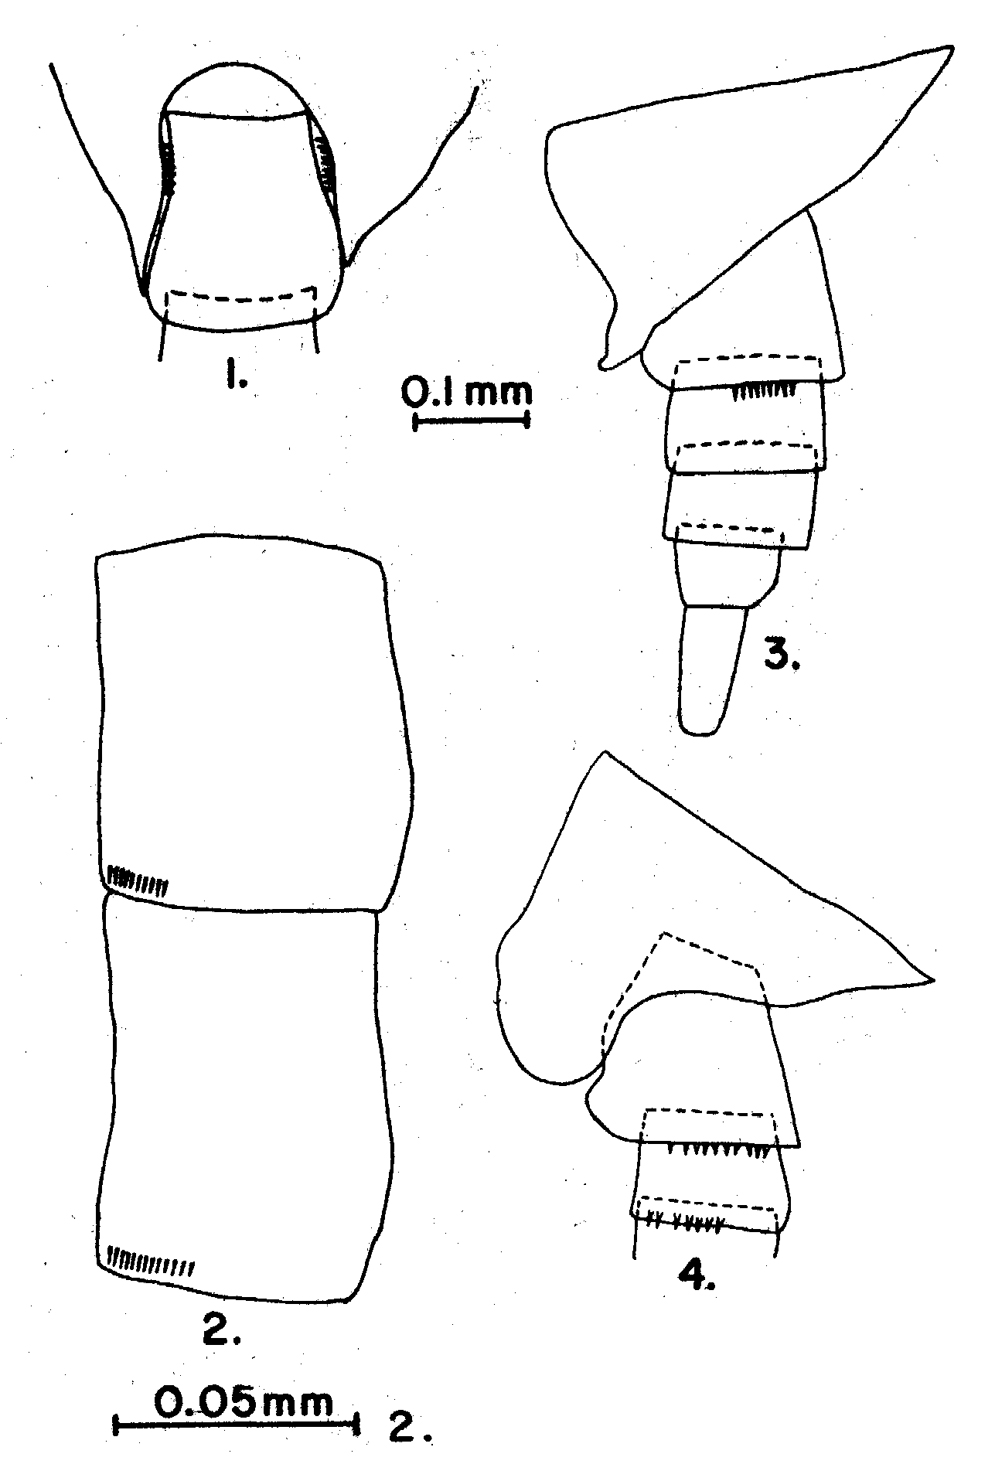 Espce Cosmocalanus darwini - Planche 10 de figures morphologiques